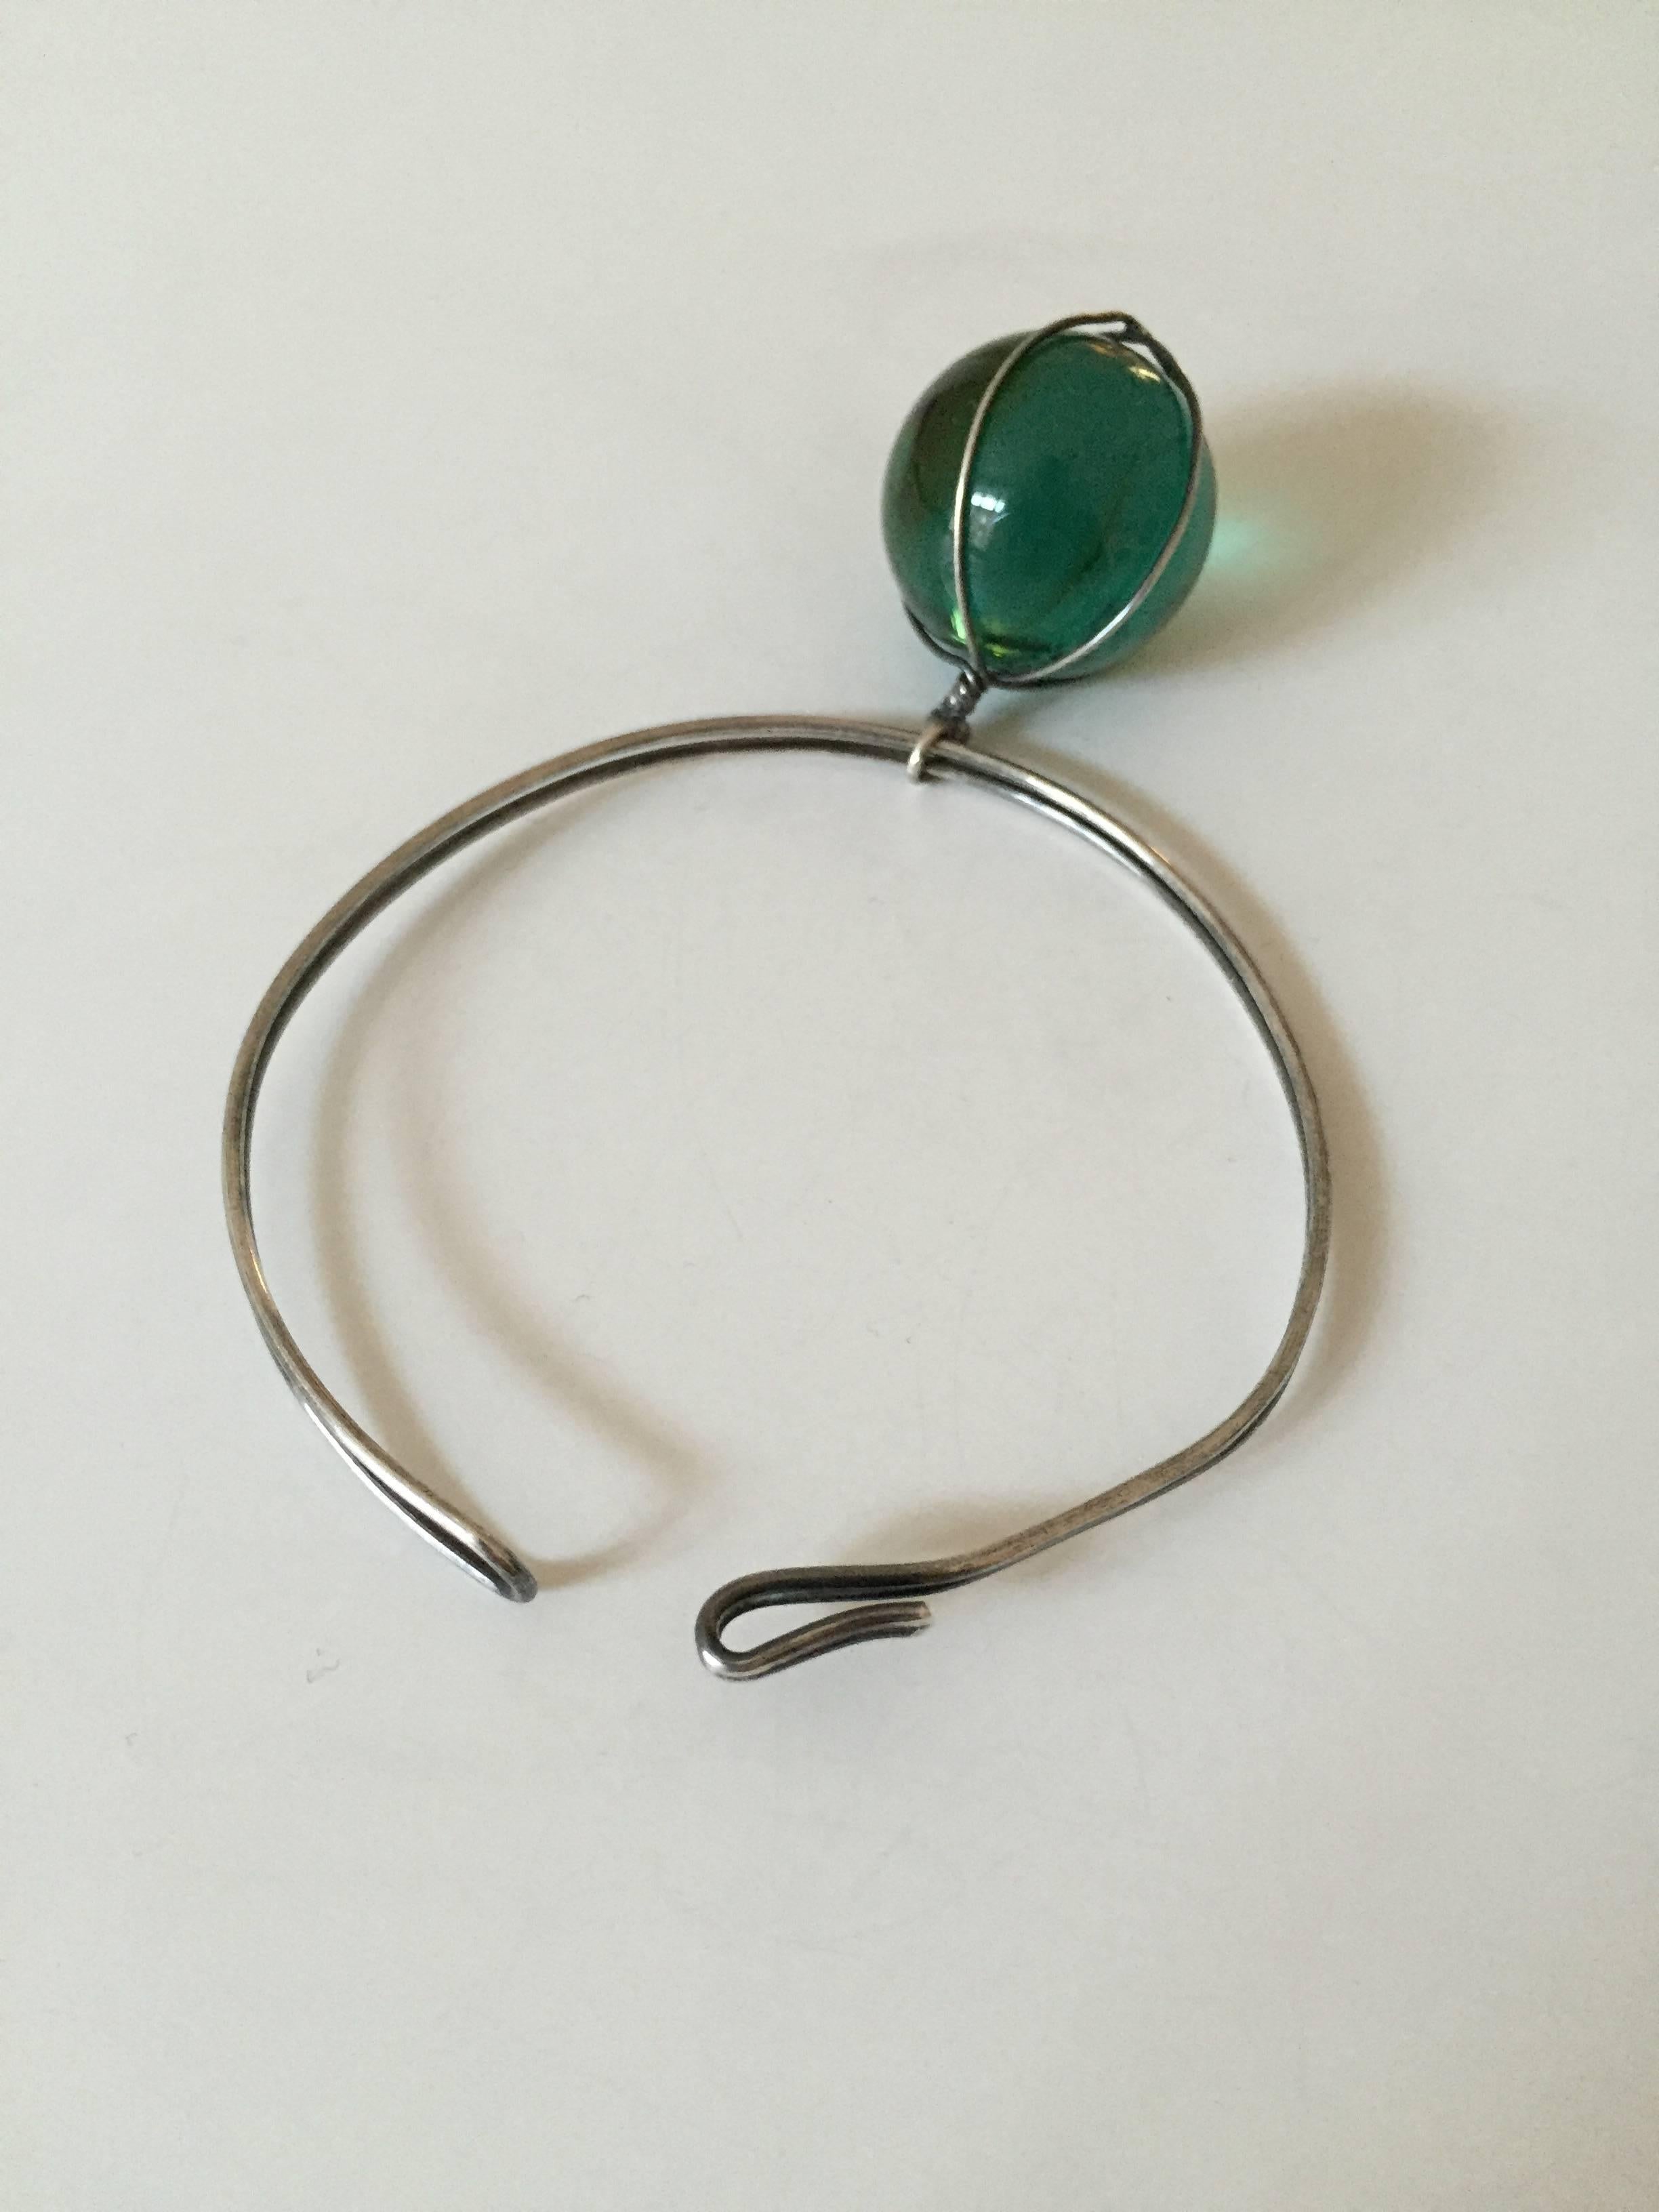 20th Century Bent Knudsen Danish Sterling Silver Bracelet with Green Glass Pendant